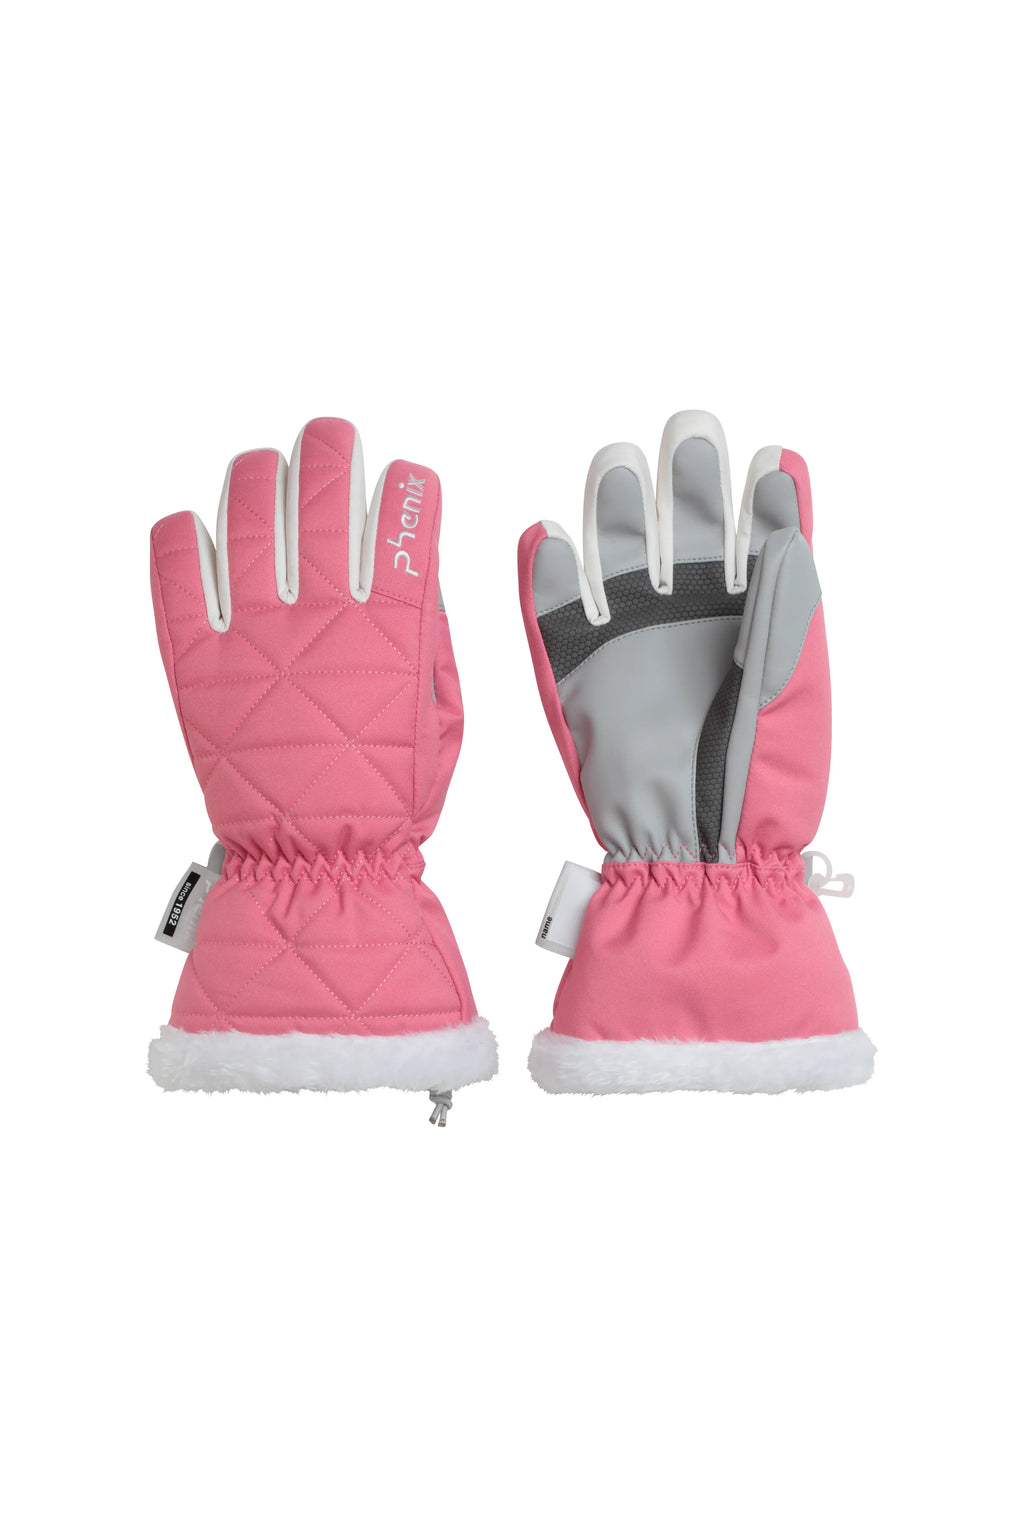 Snow White Junior Gloves|スノーホワイトジュニアグローブ